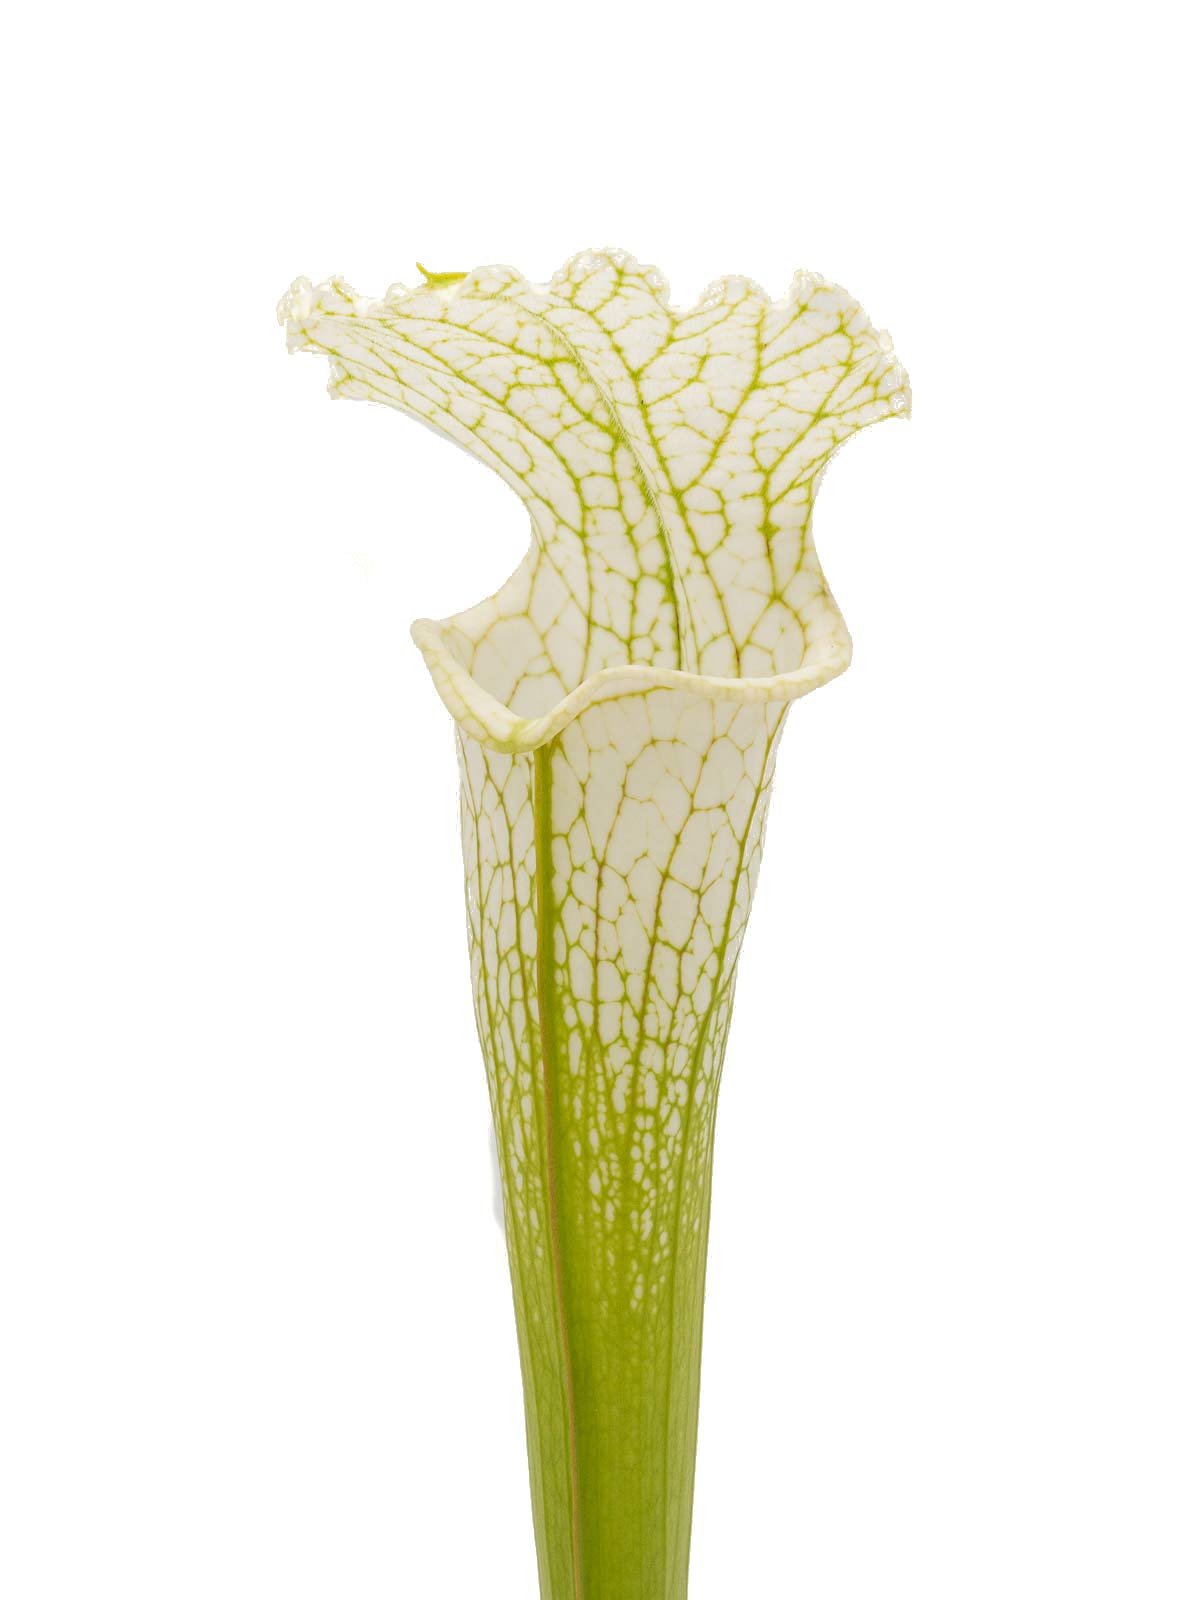 Sarracenia leucophylla - MK L04, `Schnells Ghost´, yellow flowered form